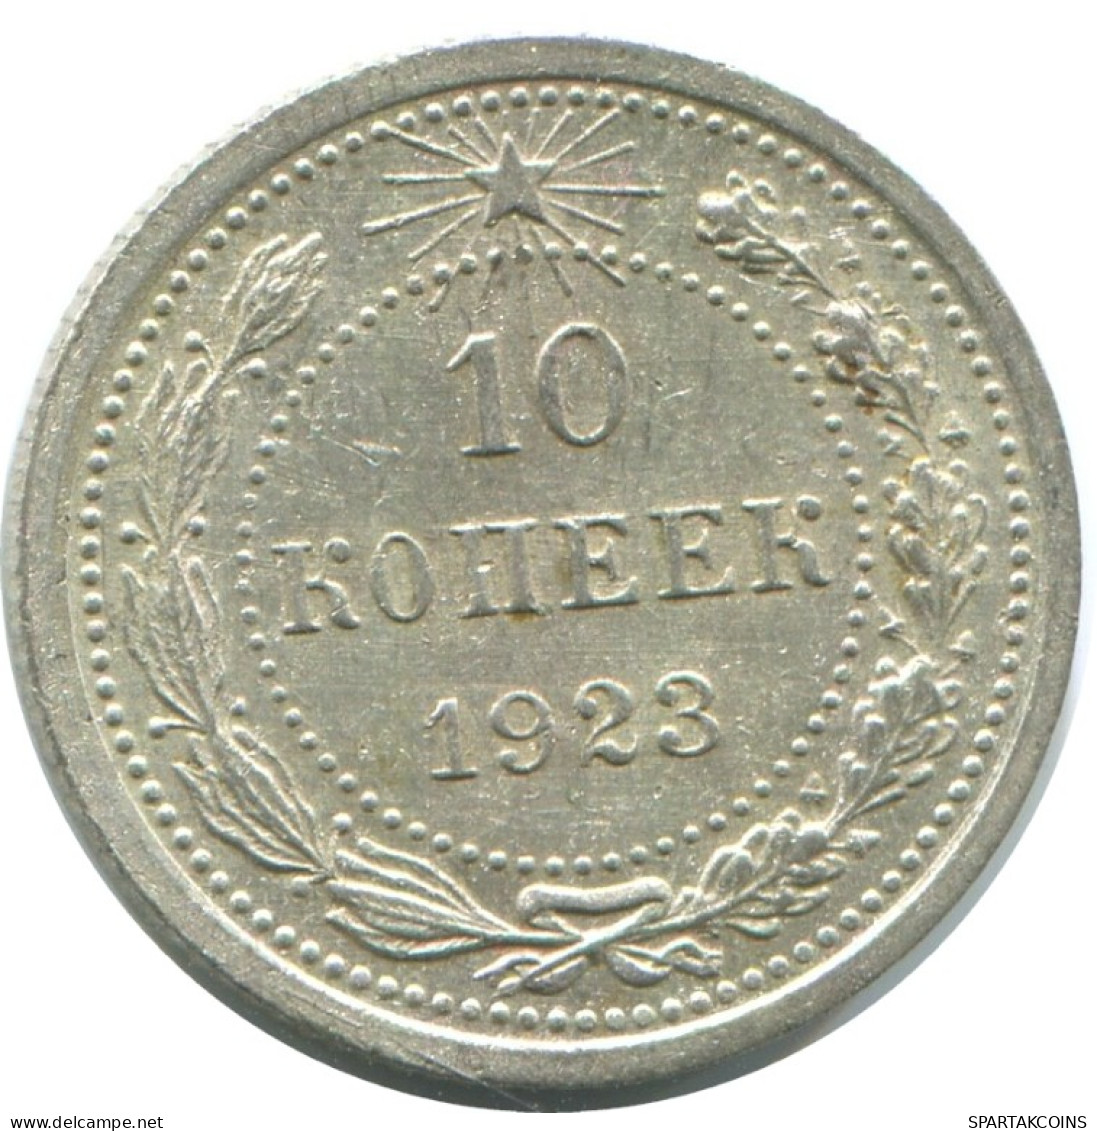 10 KOPEKS 1923 RUSSIA RSFSR SILVER Coin HIGH GRADE #AE918.4.U.A - Rusia